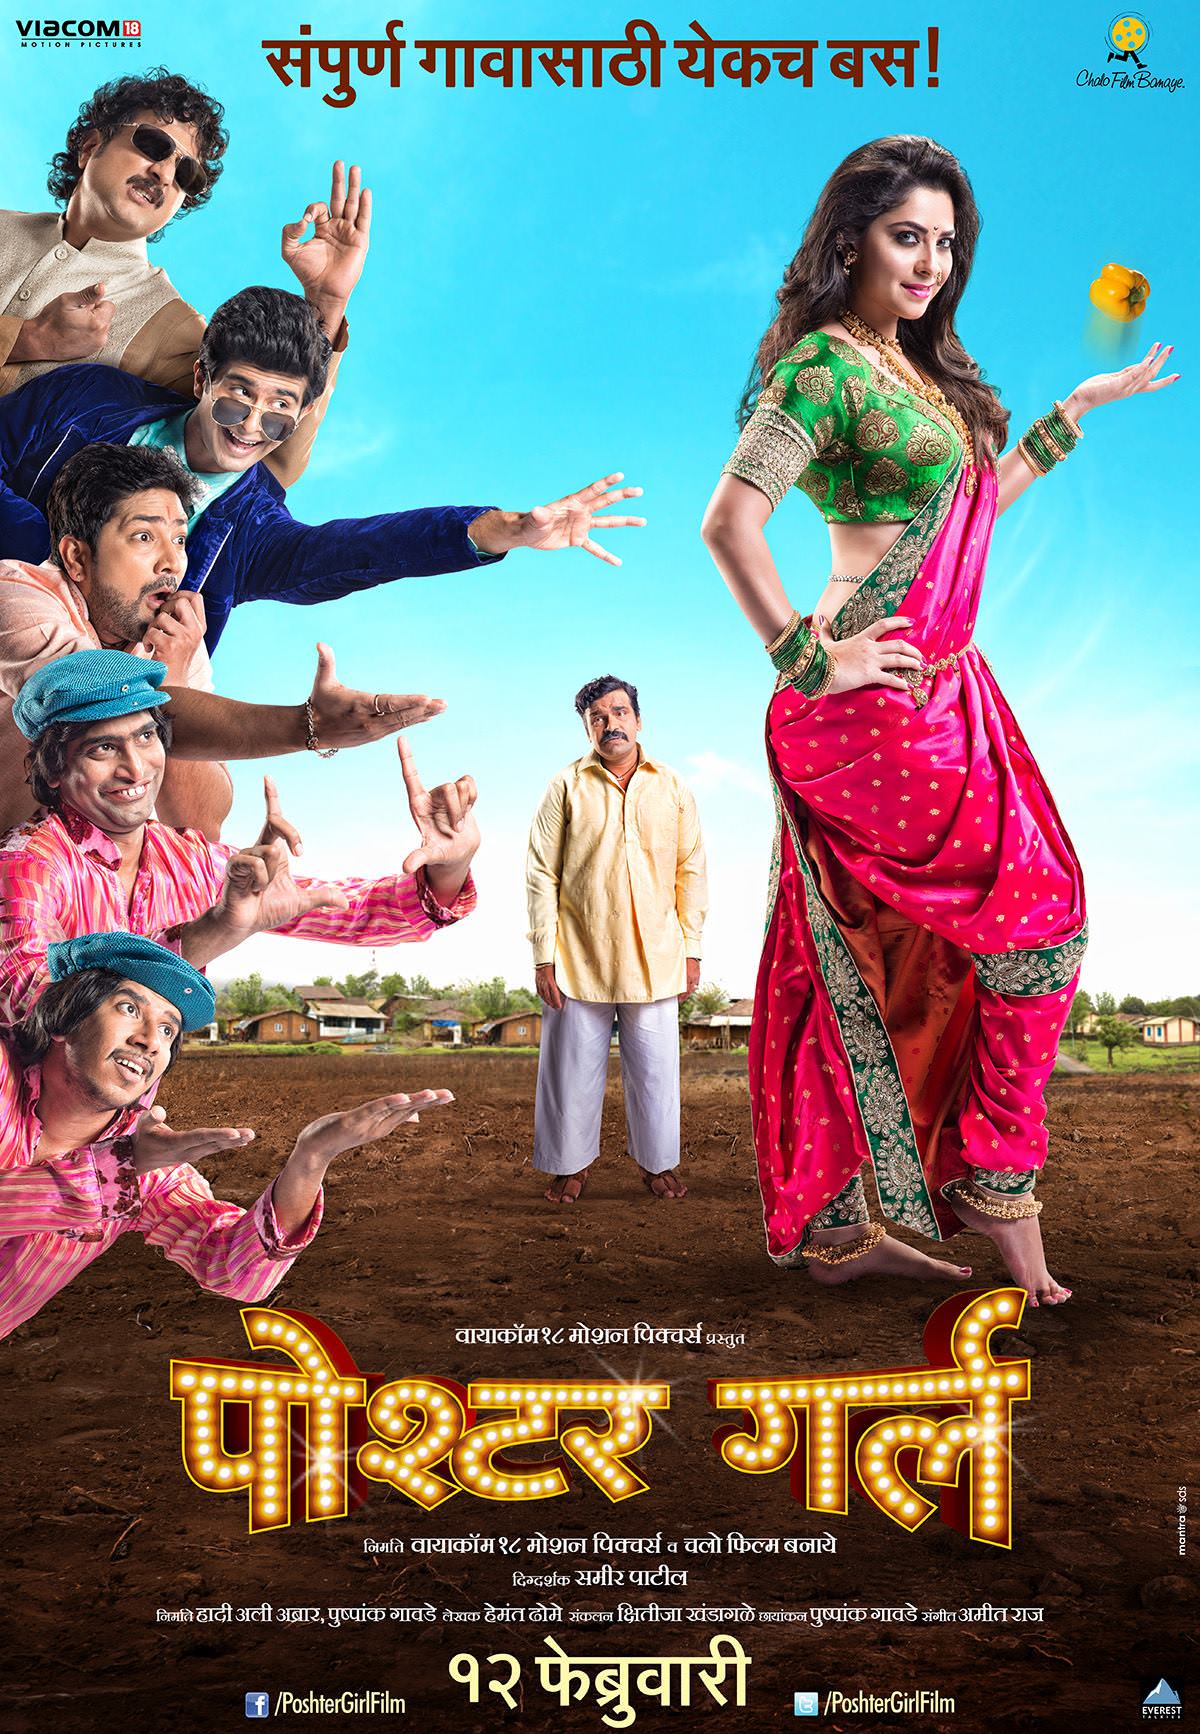 laal ishq marathi movie download hd 720p free download